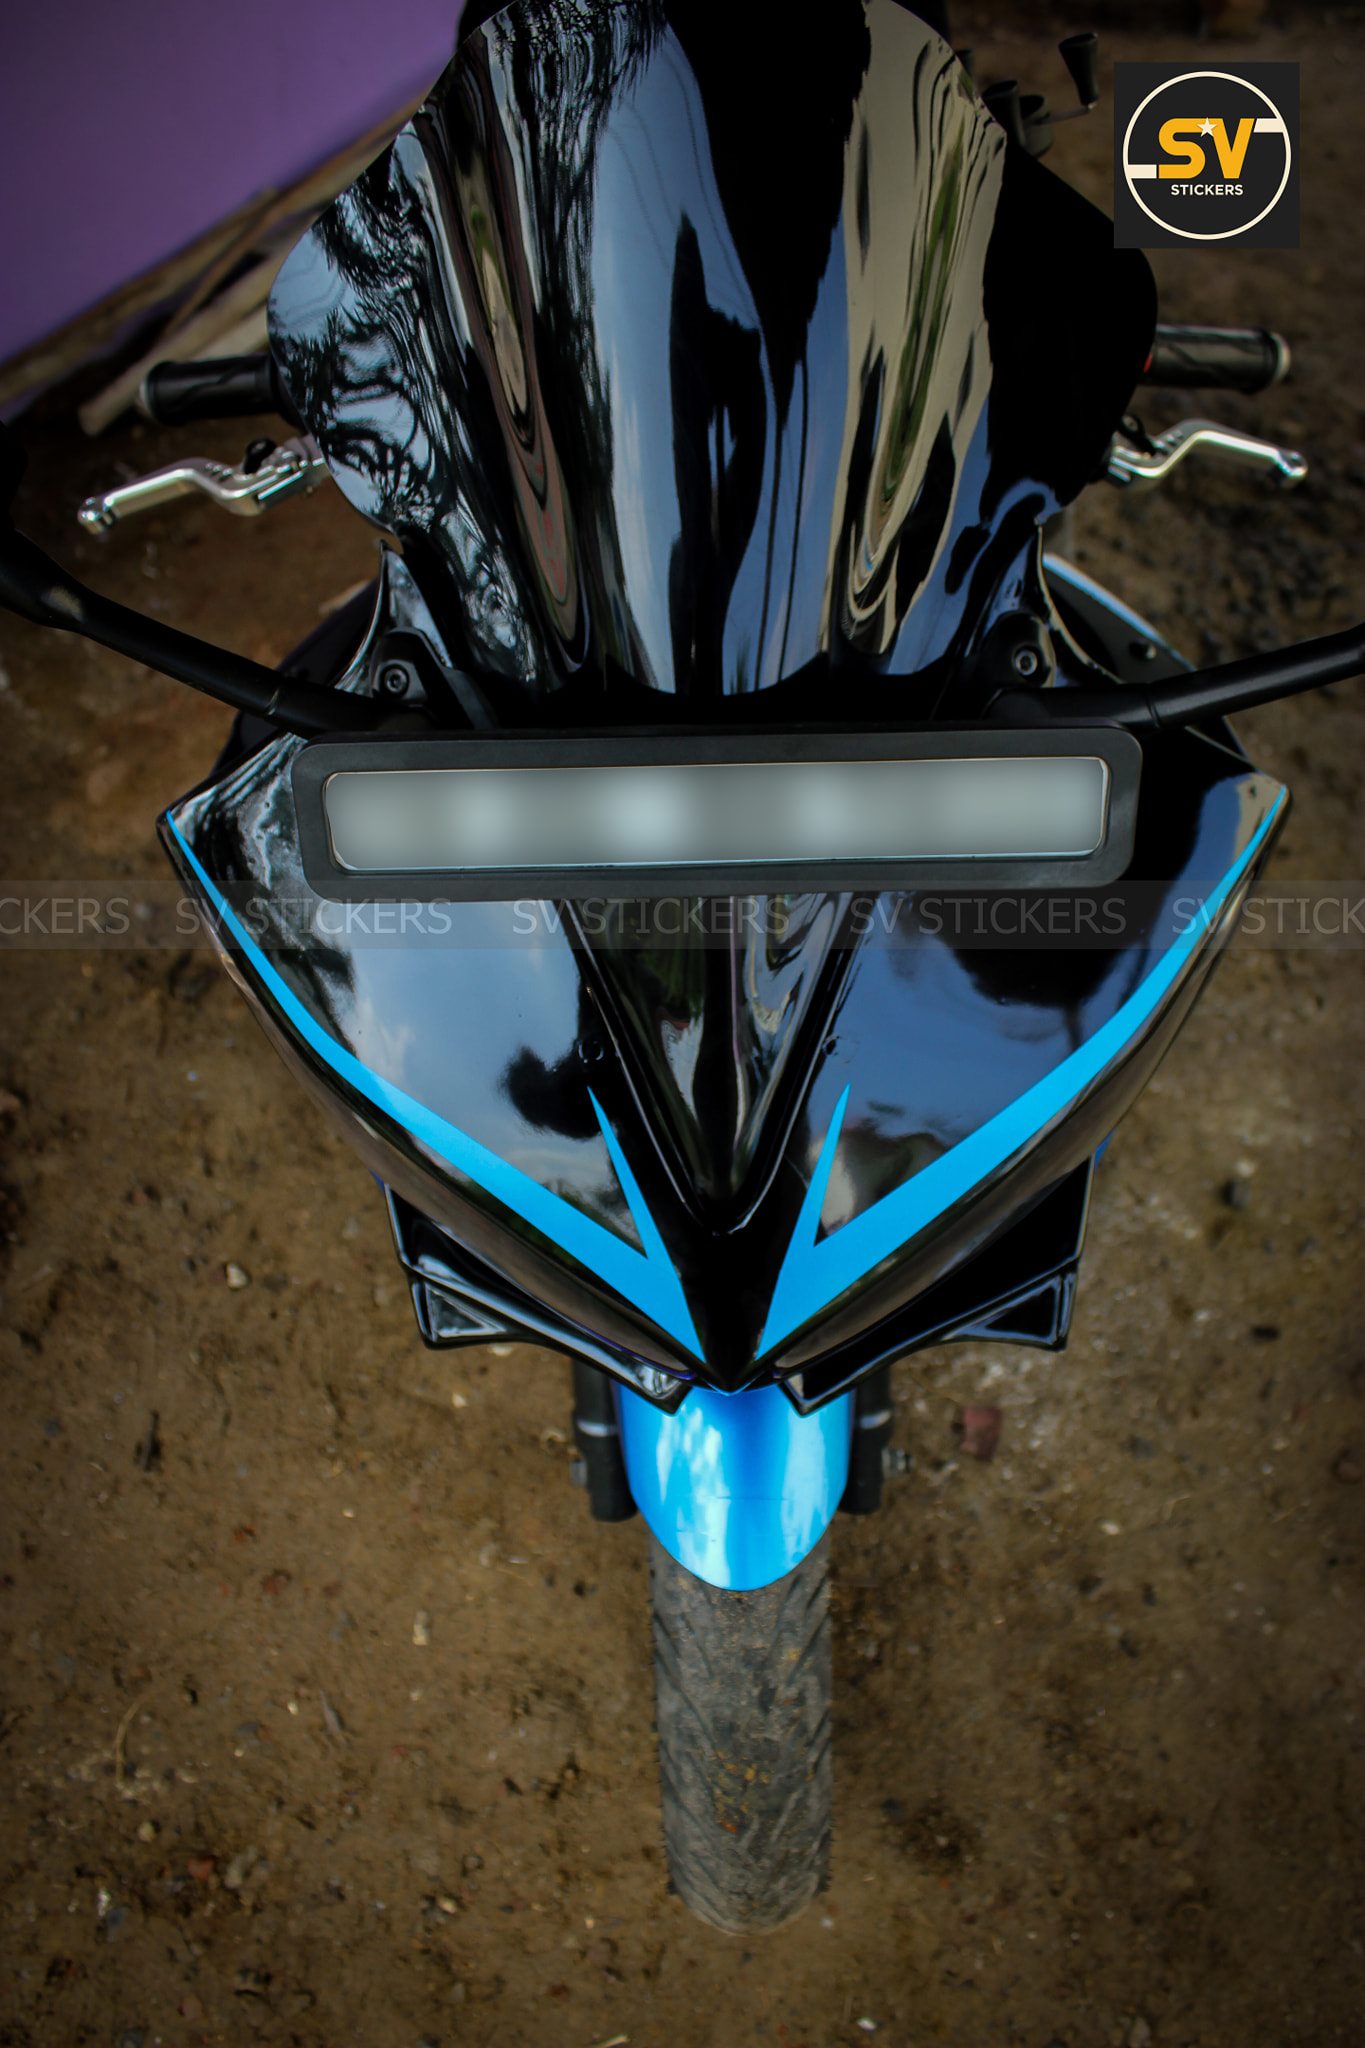 Meet Bright Blue Yamaha R15 Version 2.0 by SV Stickers - shot